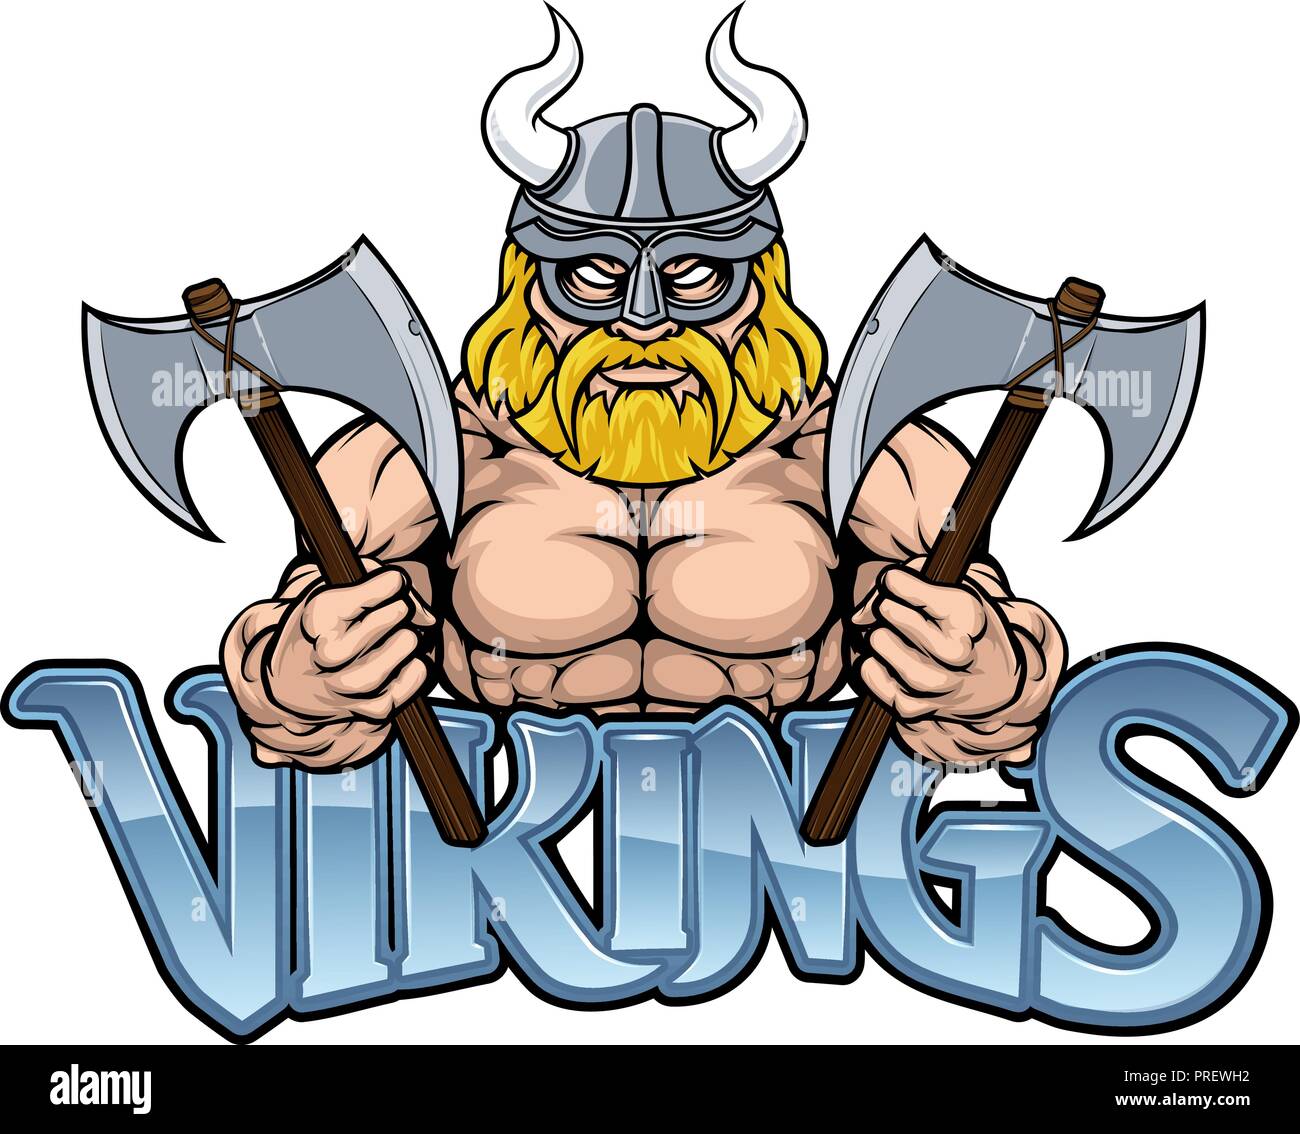 Viking Warrior Sports Mascot Stock Vector